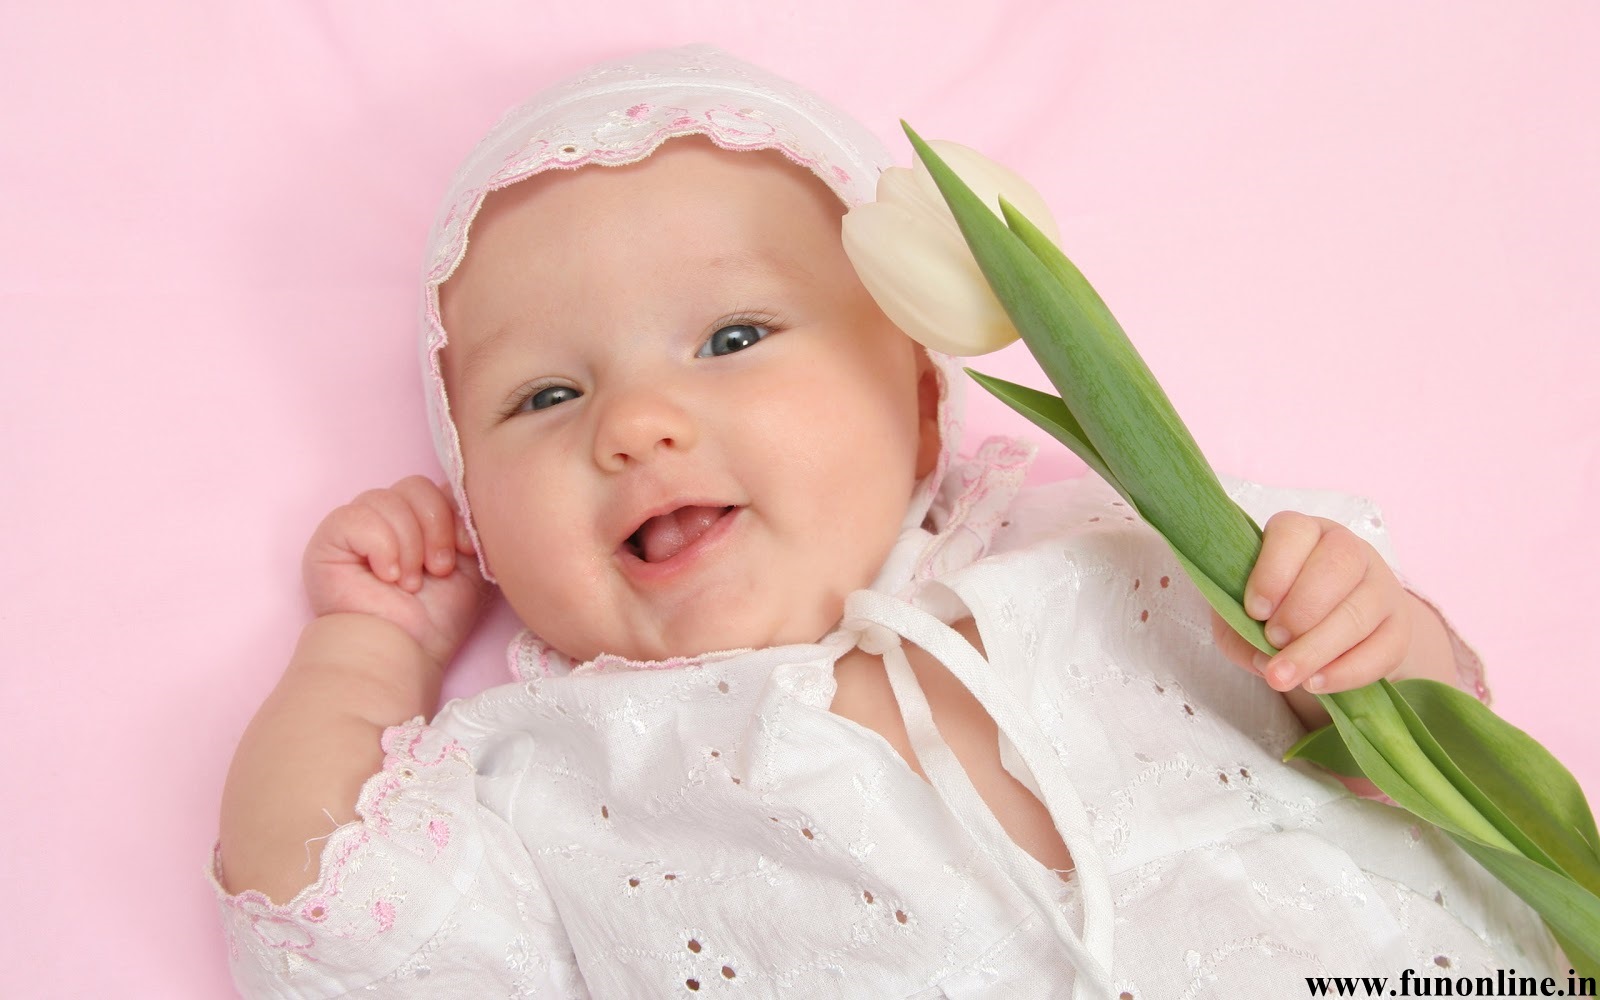 Sweet Babies Wallpaper HD In Baby Imageci